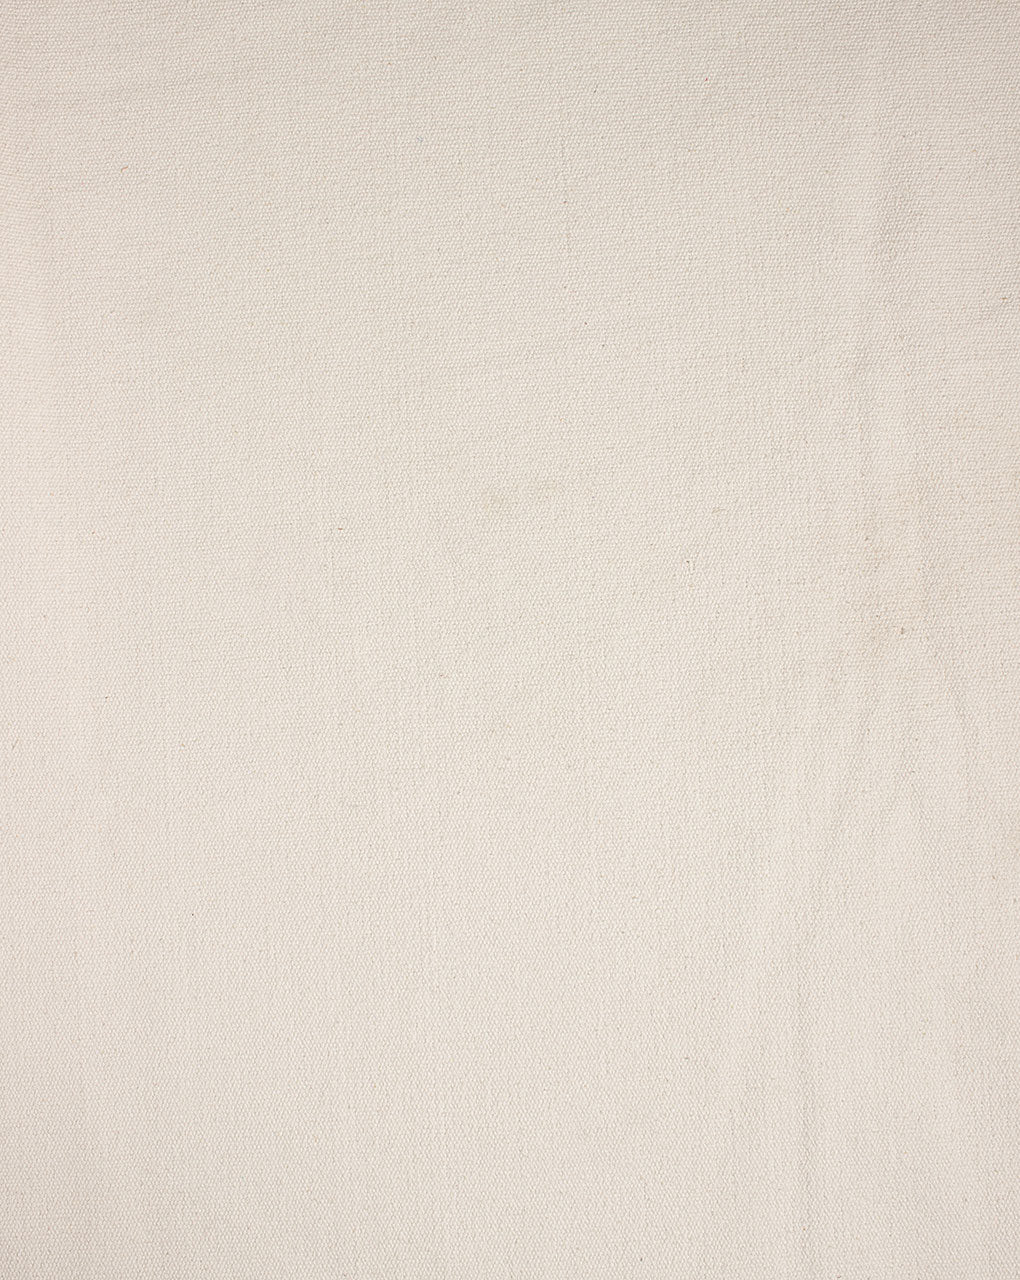 2x6/2x6 (56 x 32) Cotton Canvas Fabric ( Width 62" )